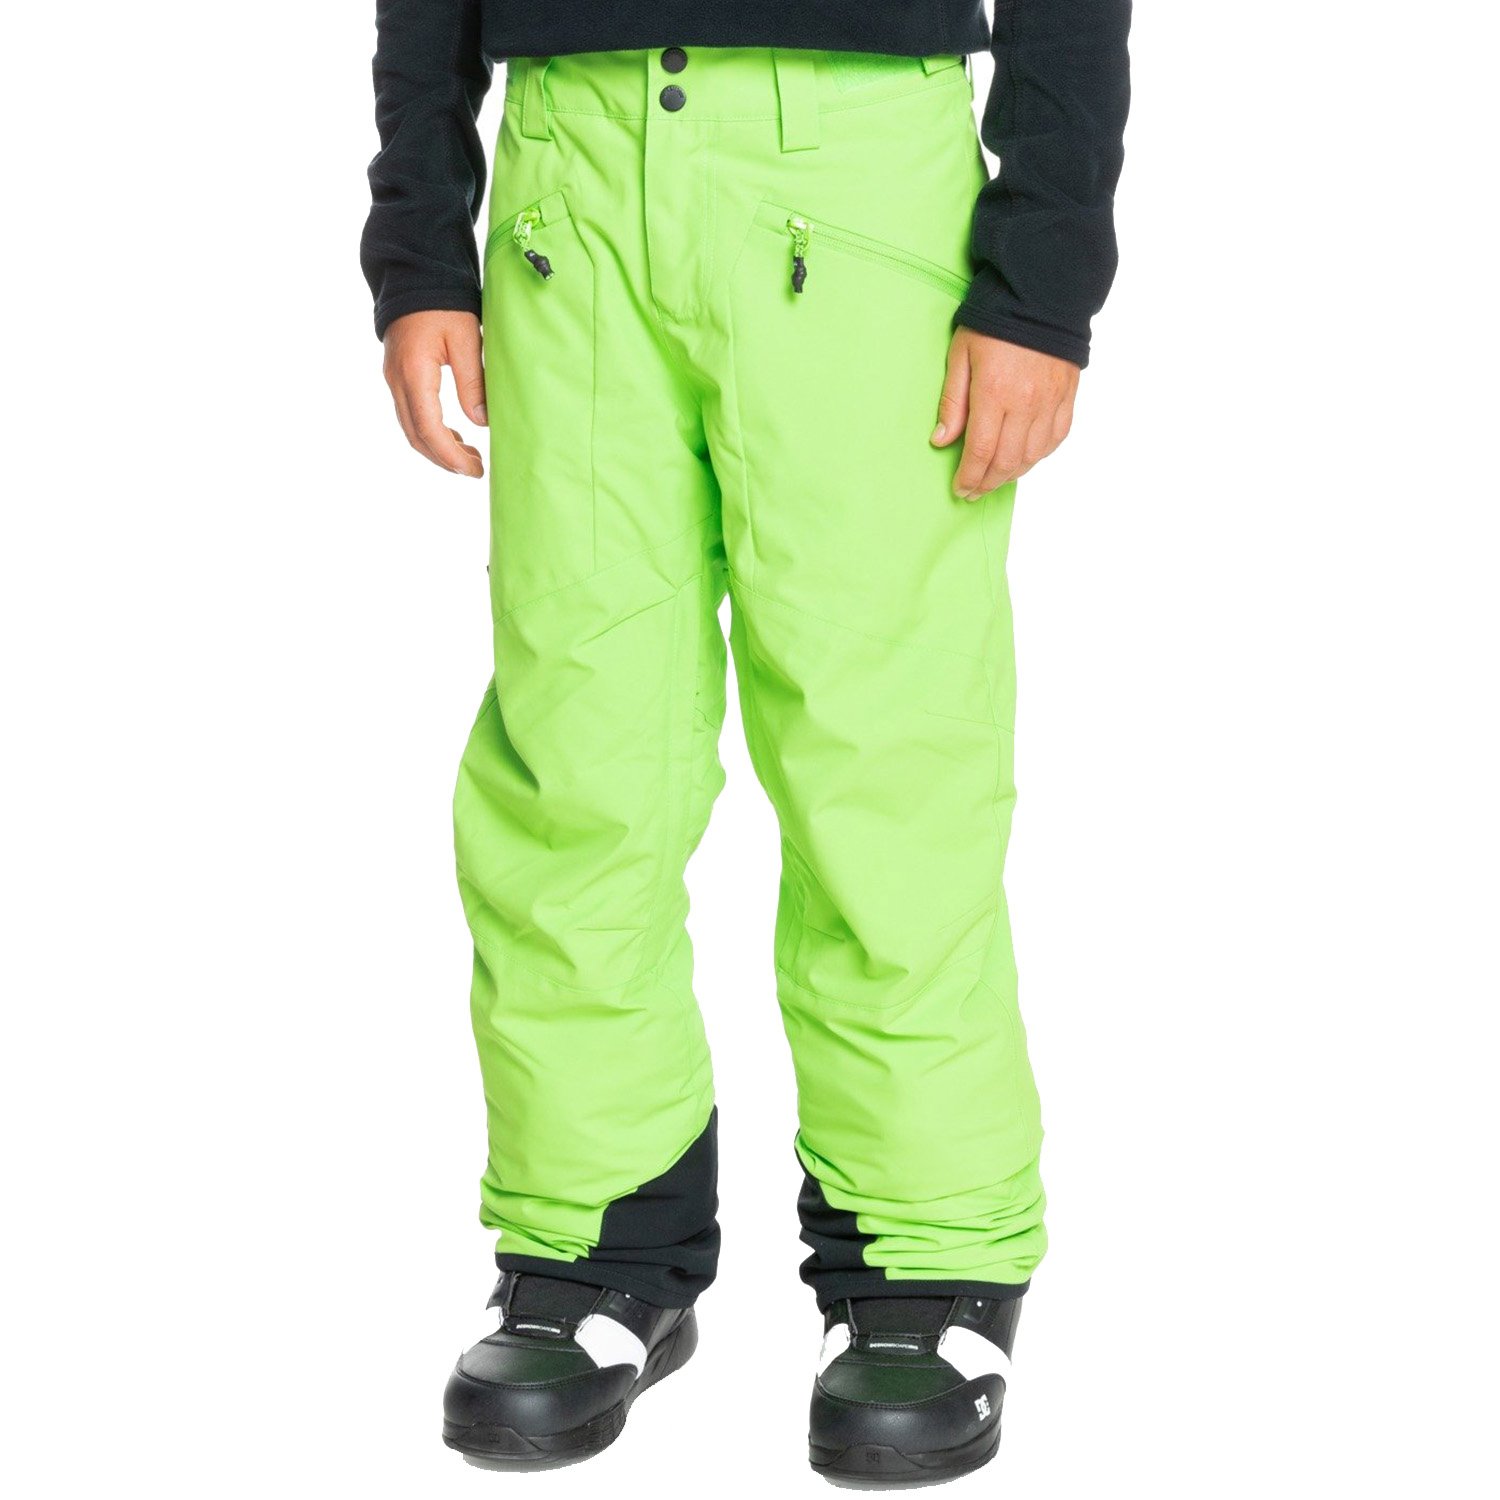 Quiksilver Boundry Çocuk Snowboard Pantolonu - YEŞİL - 1